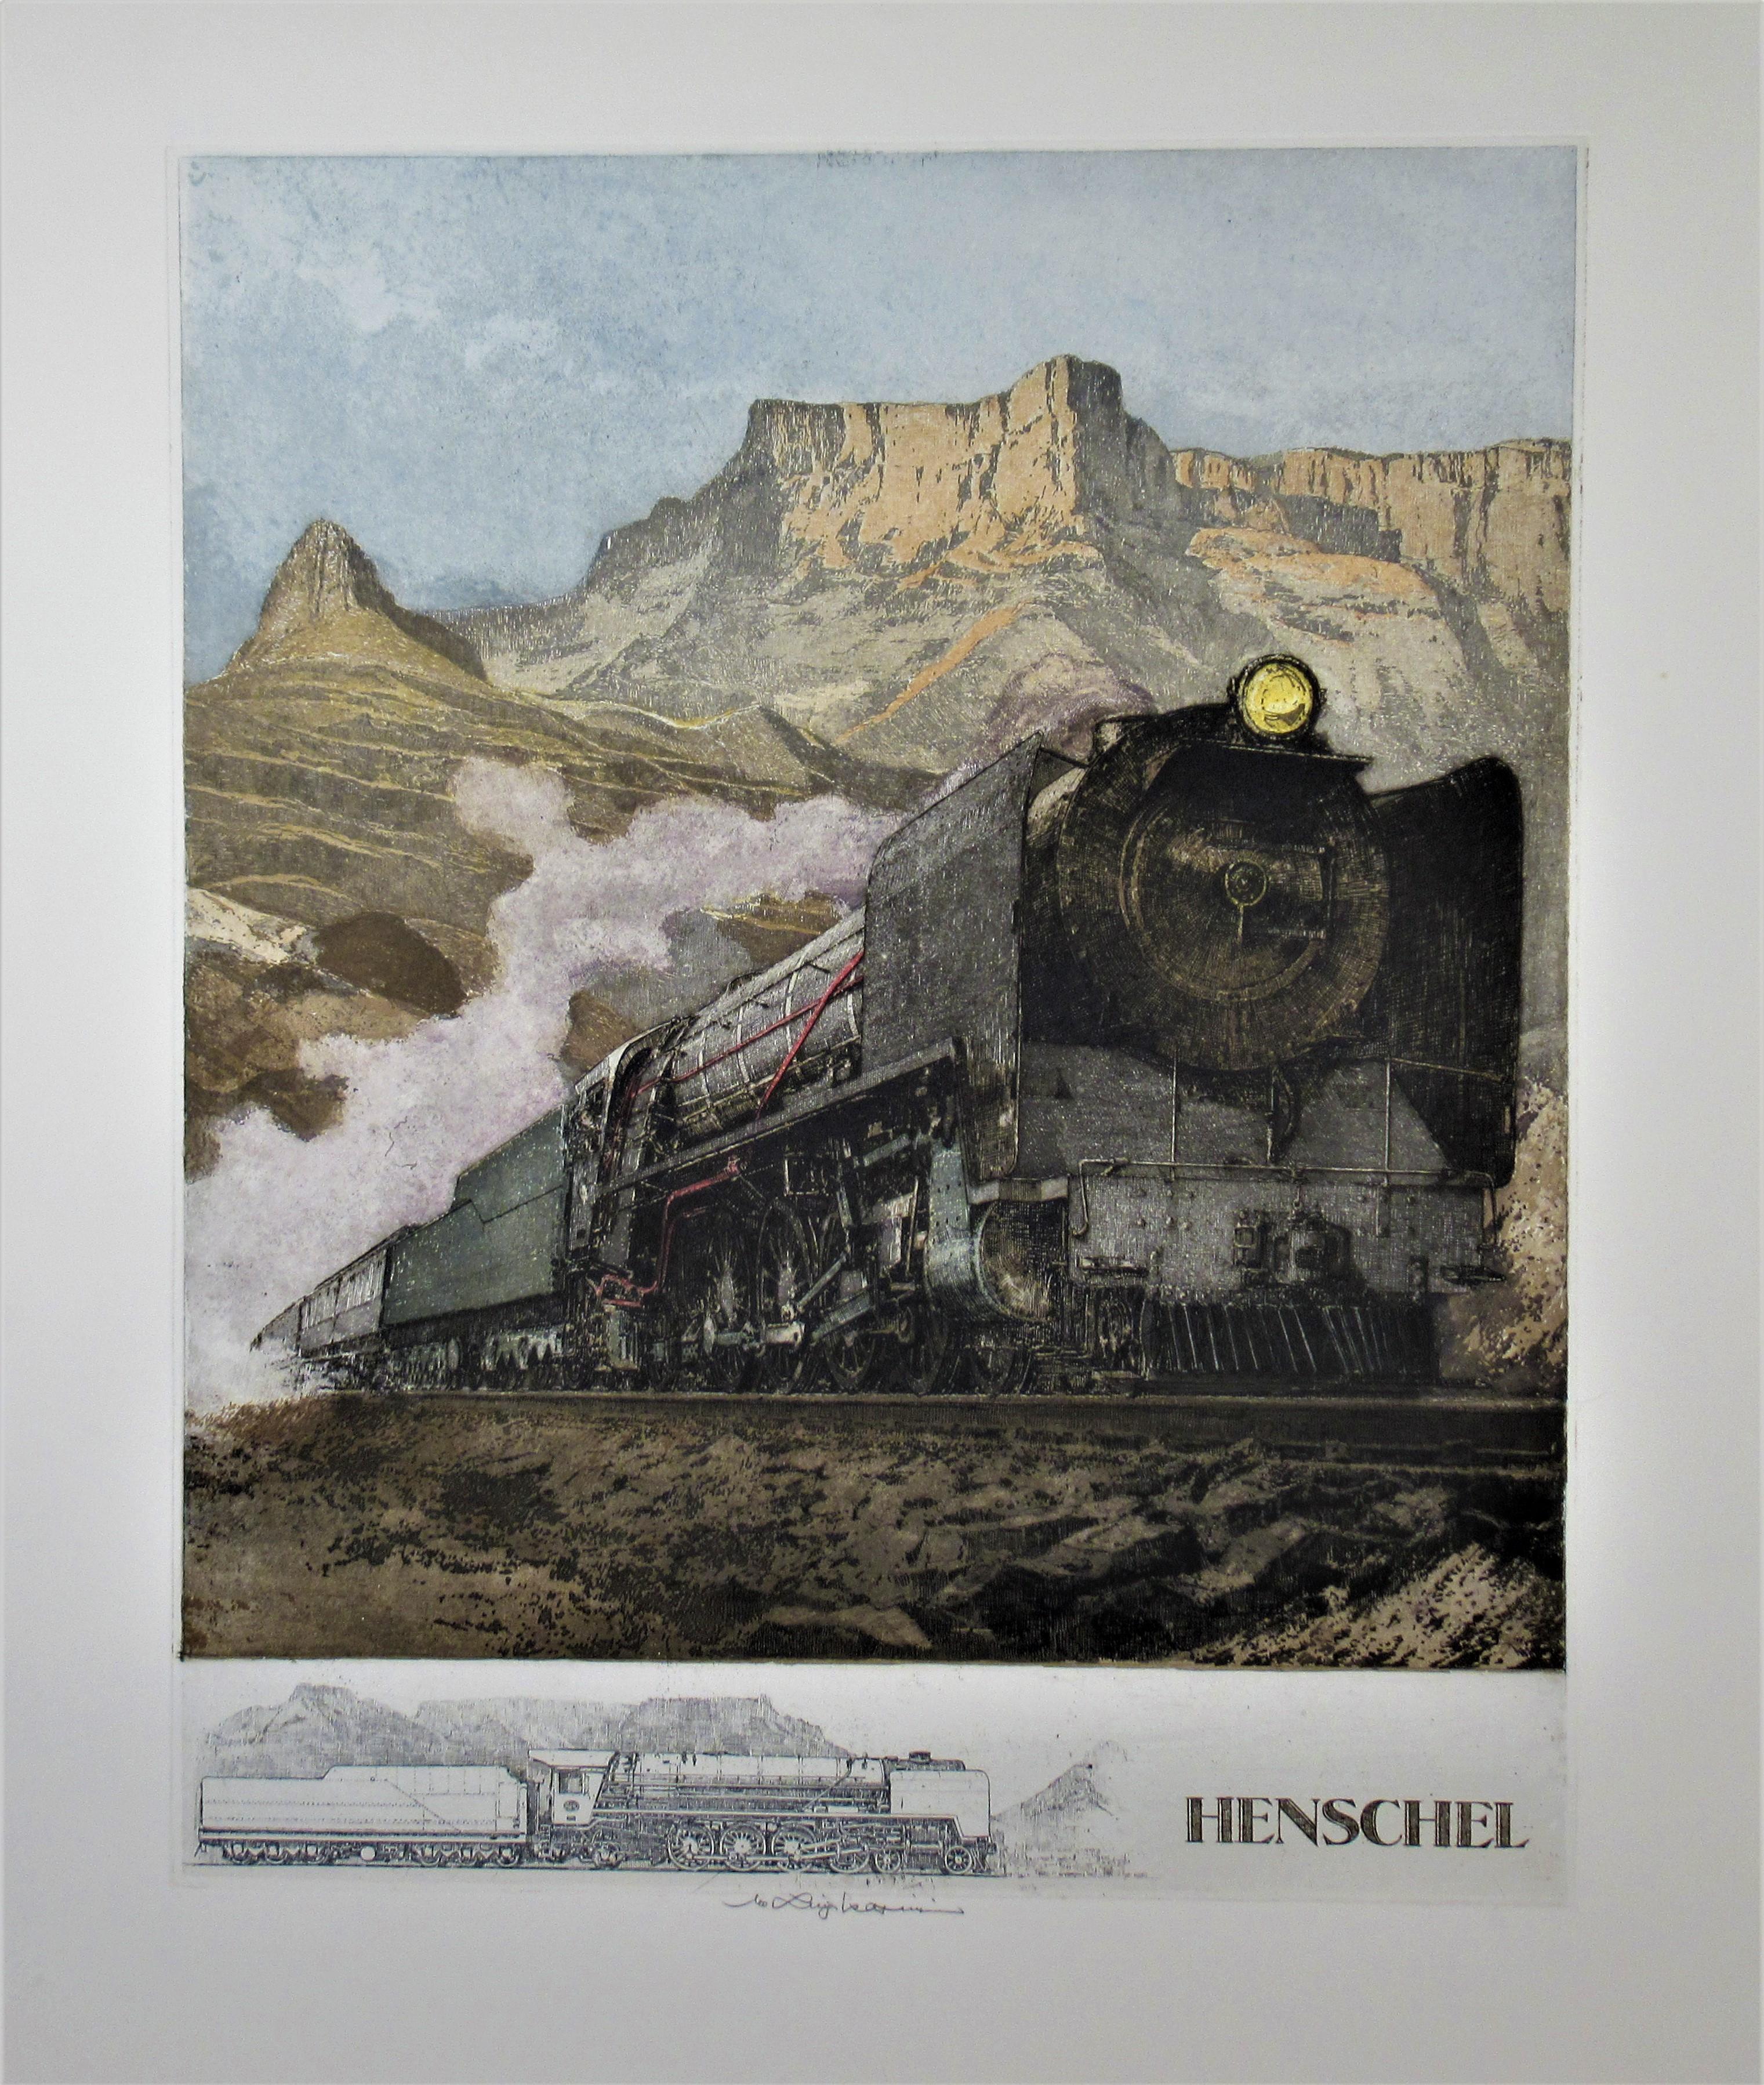 Luigi Kasimir Figurative Print - Henschel Locomotive, large color etching